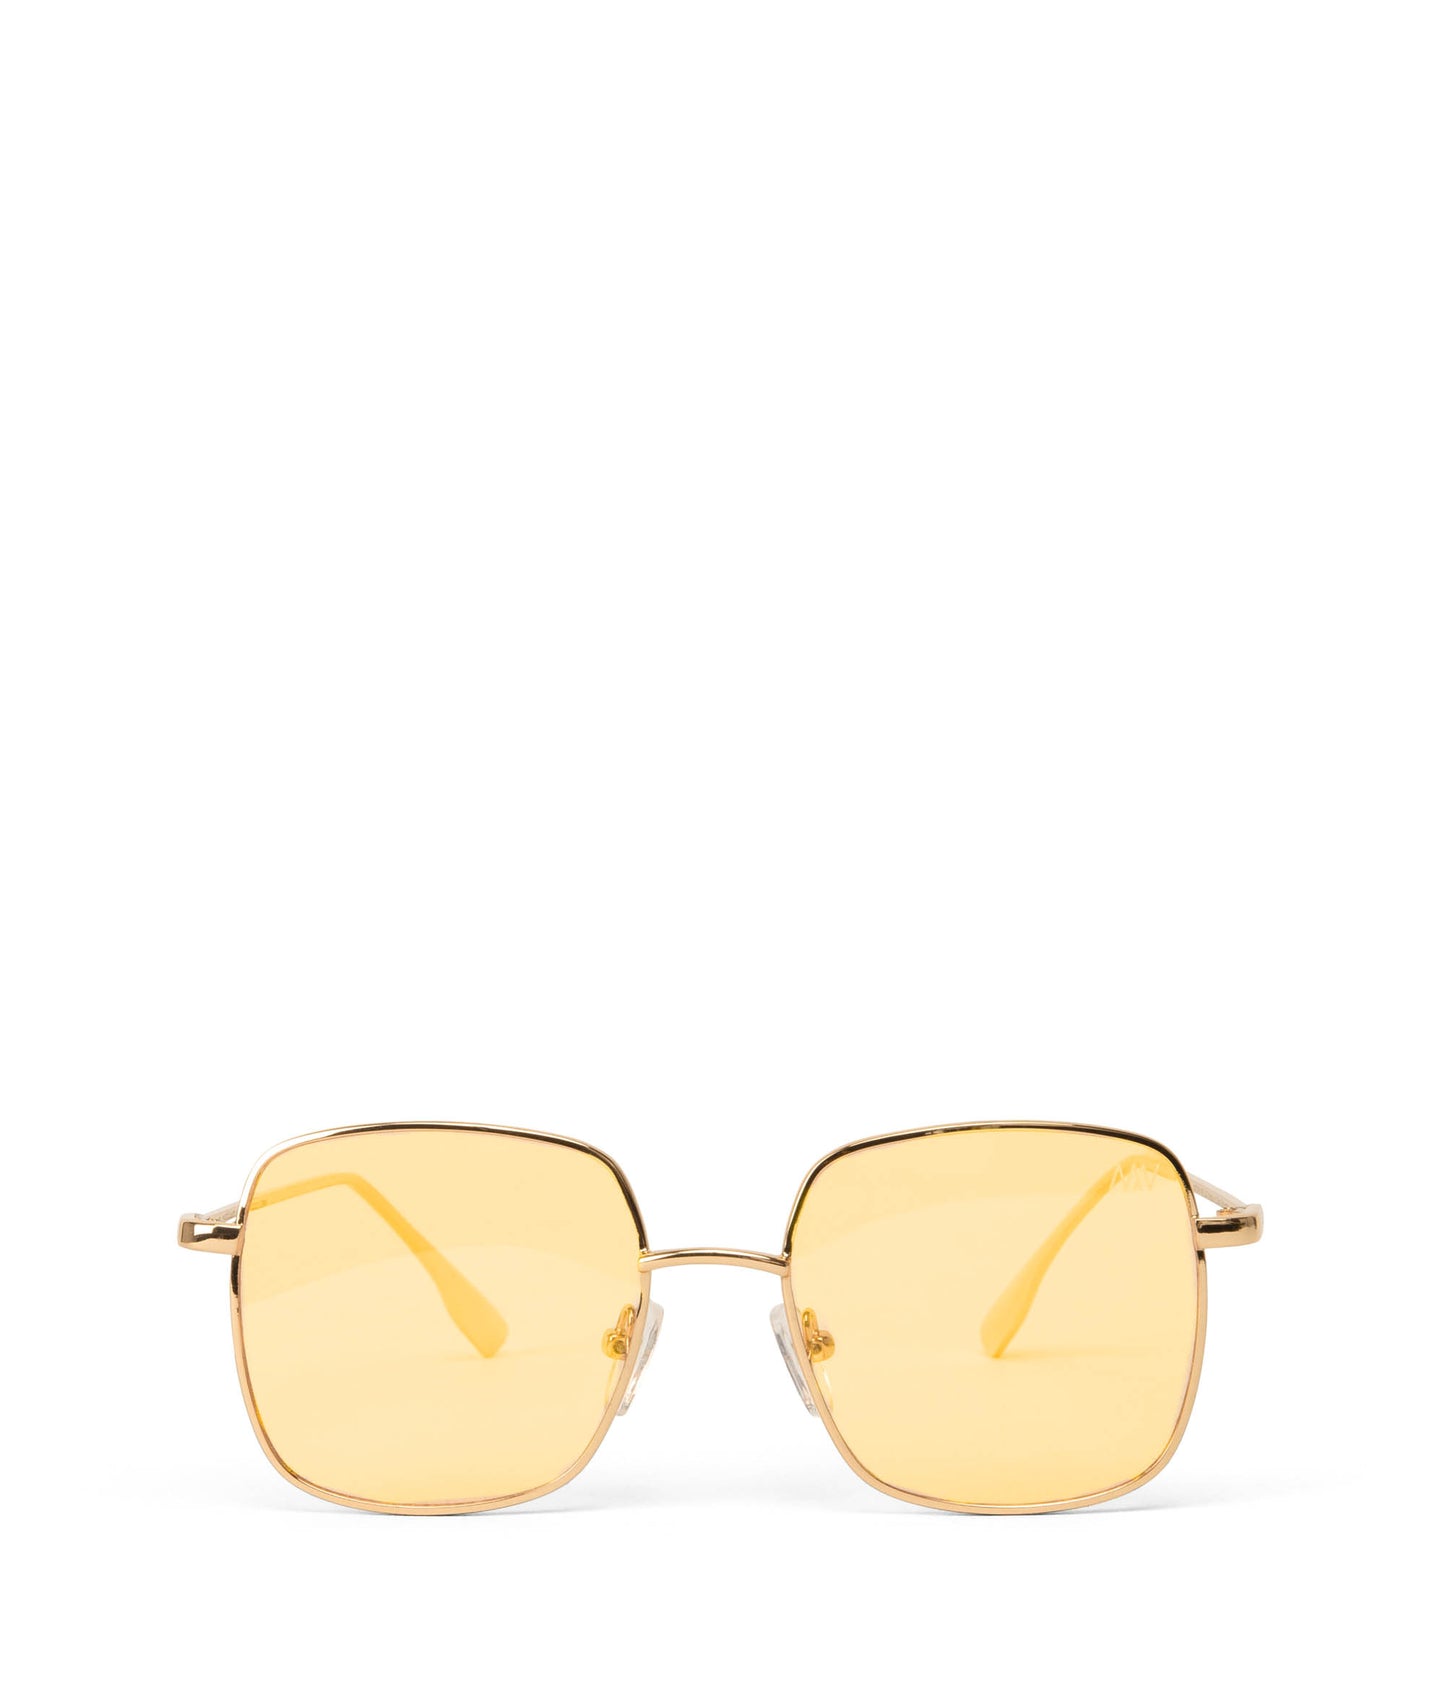 KAYASM Small Square Sunglasses